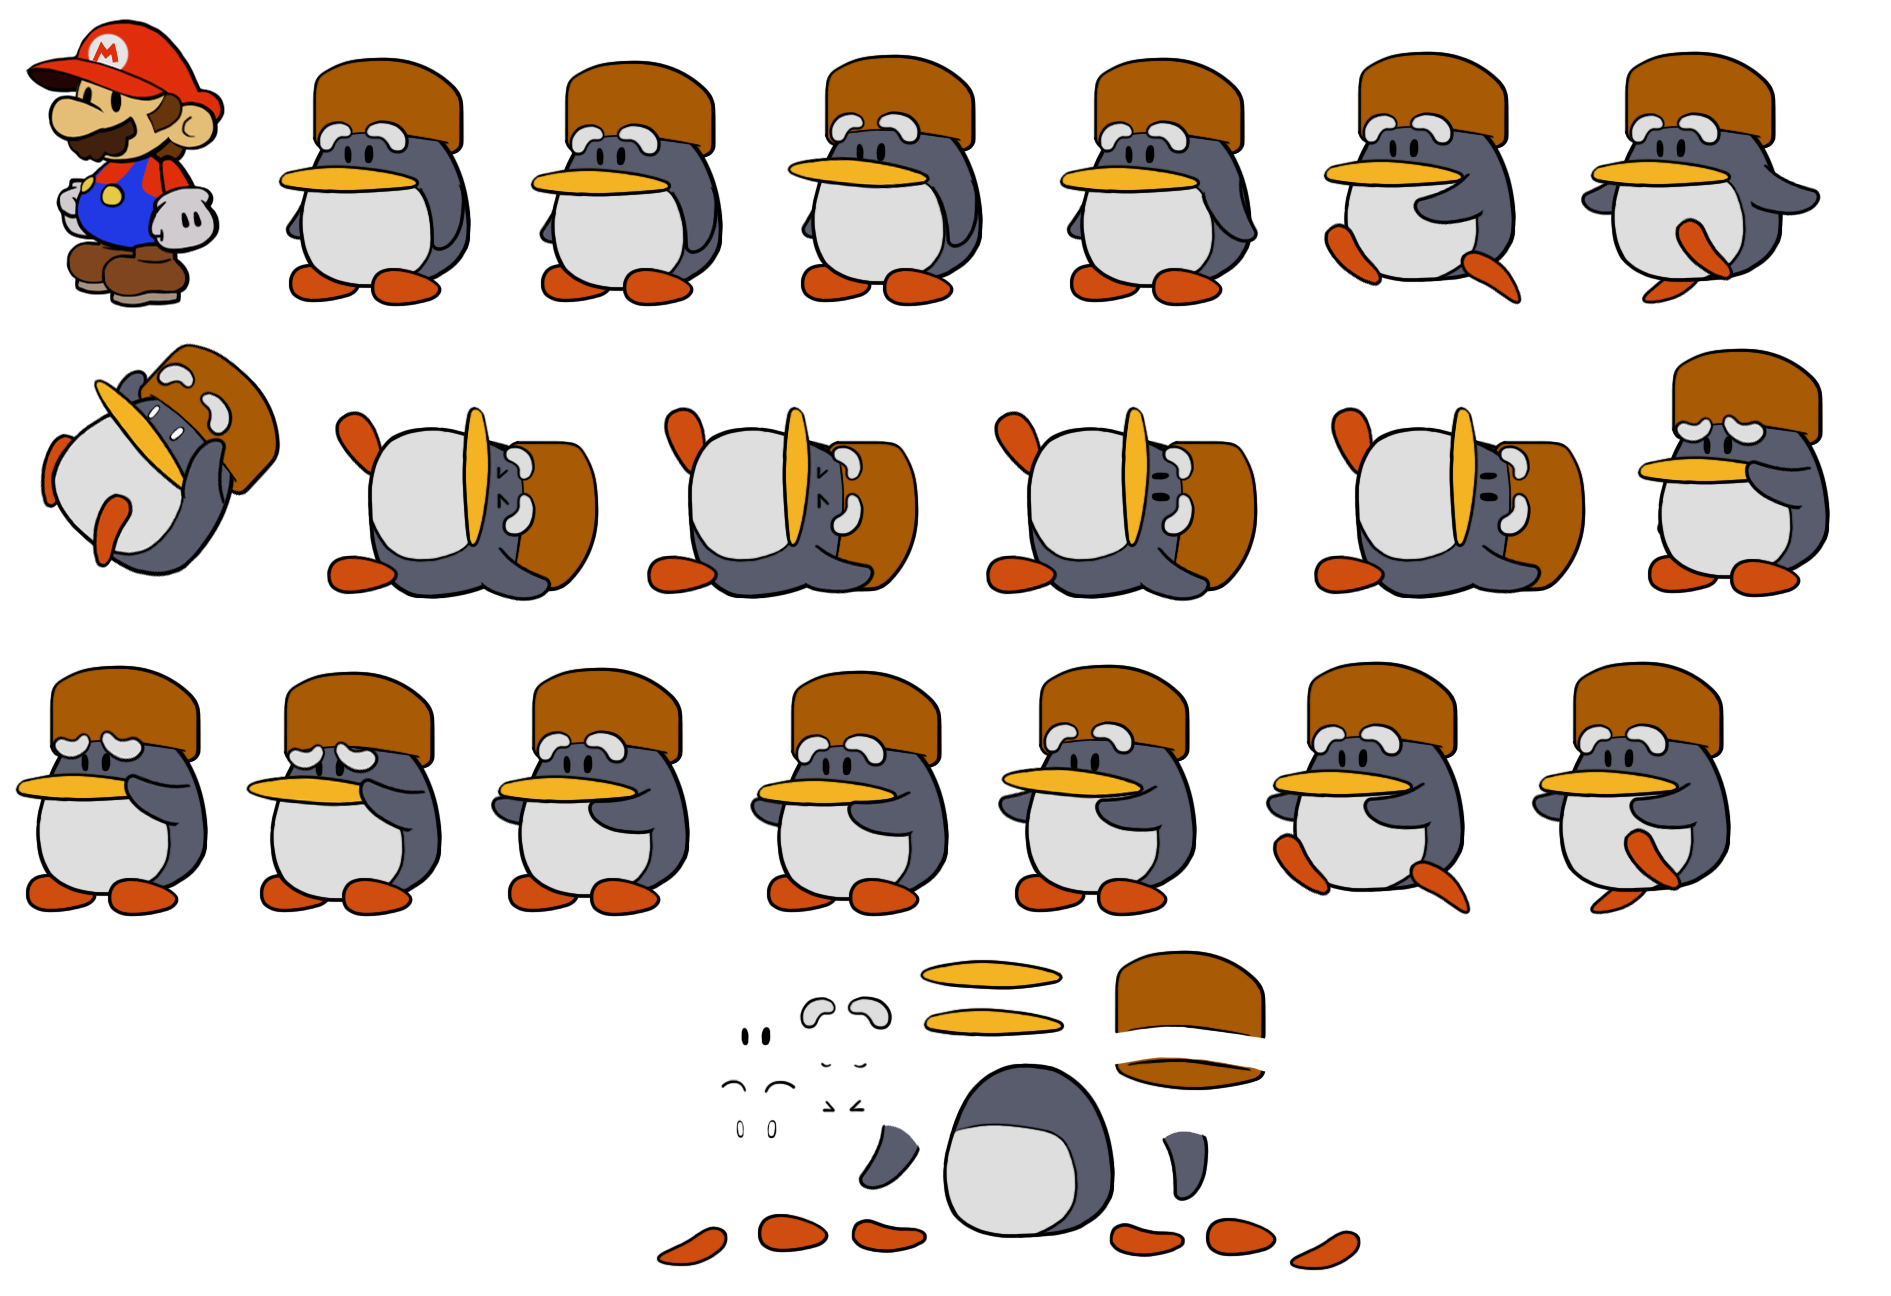 Mario Bros Penguin